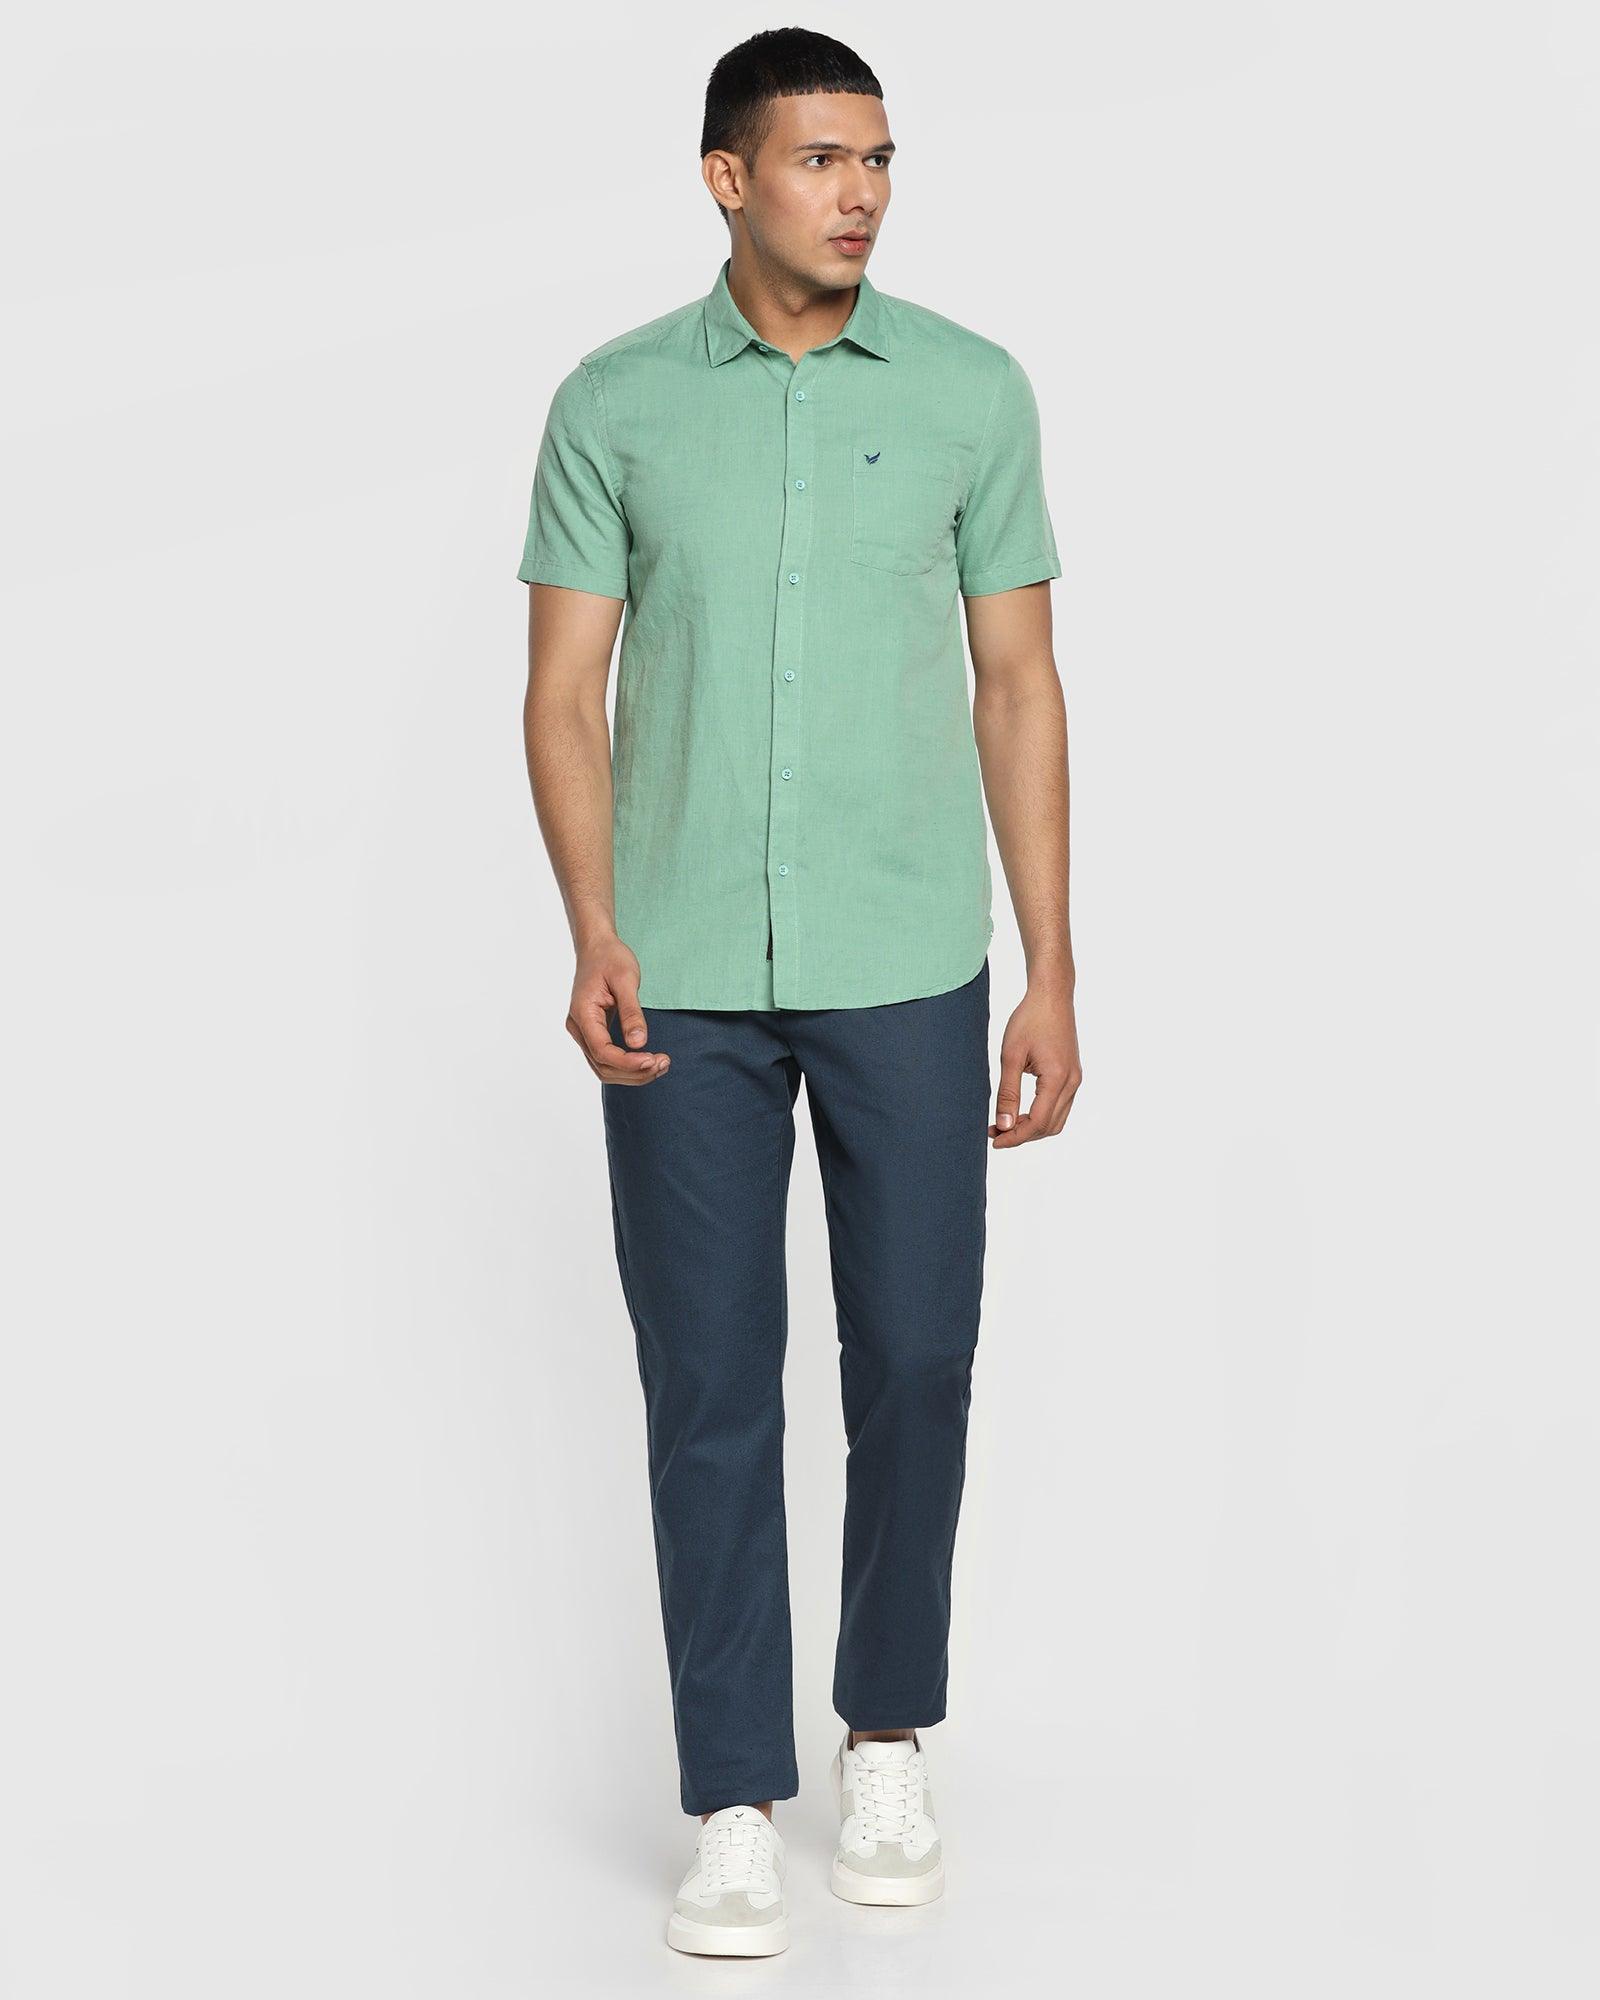 Linen Formal Half Sleeve Green Solid Shirt - Salmon